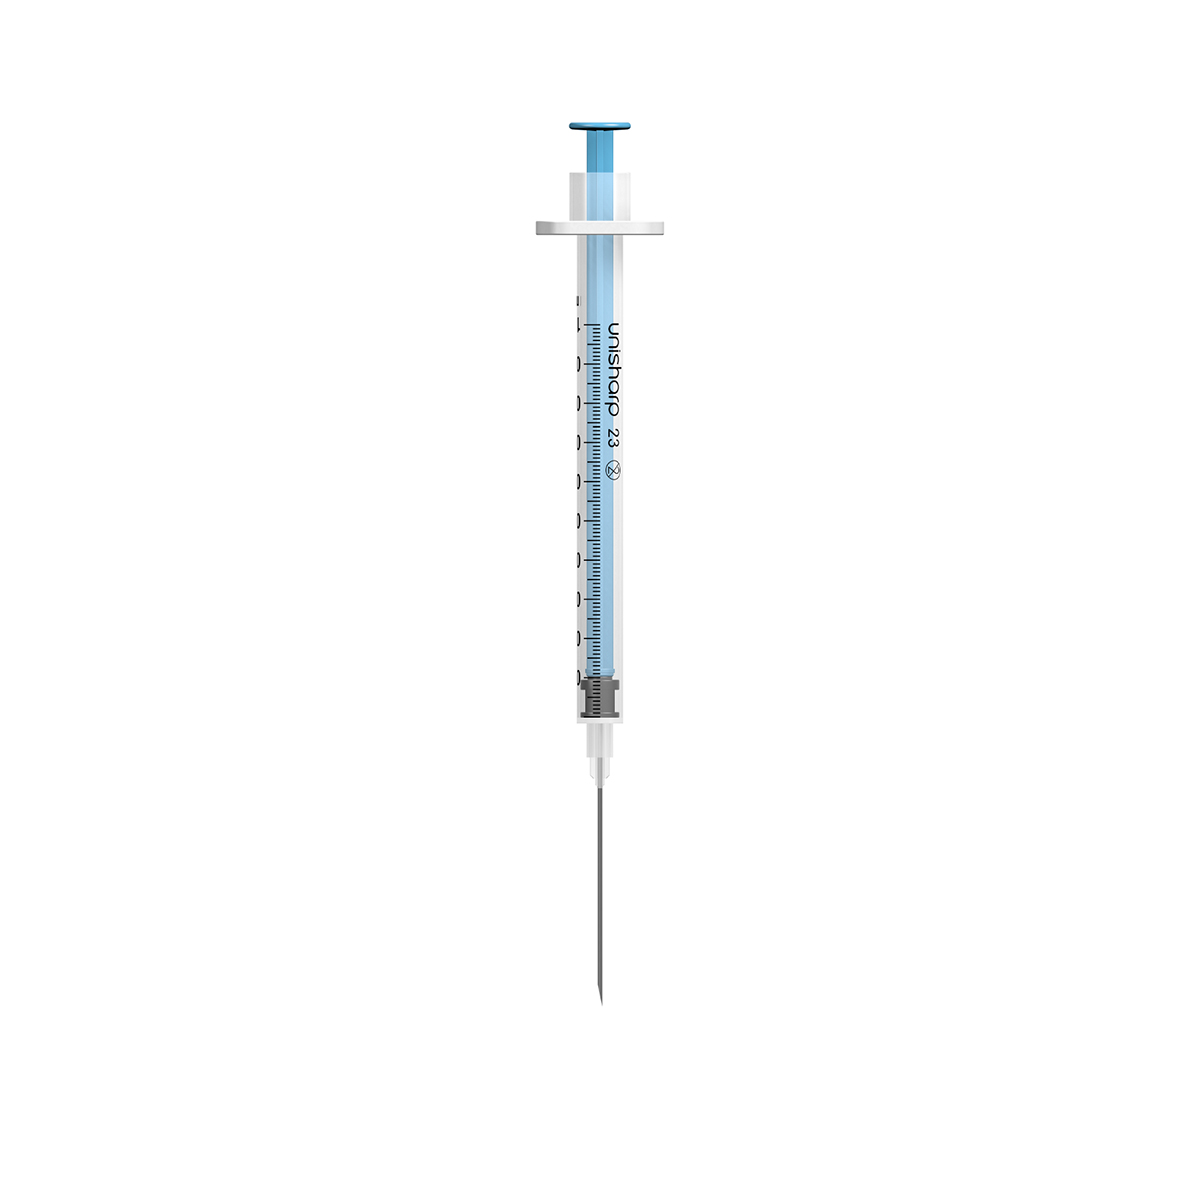 U2332 syringe